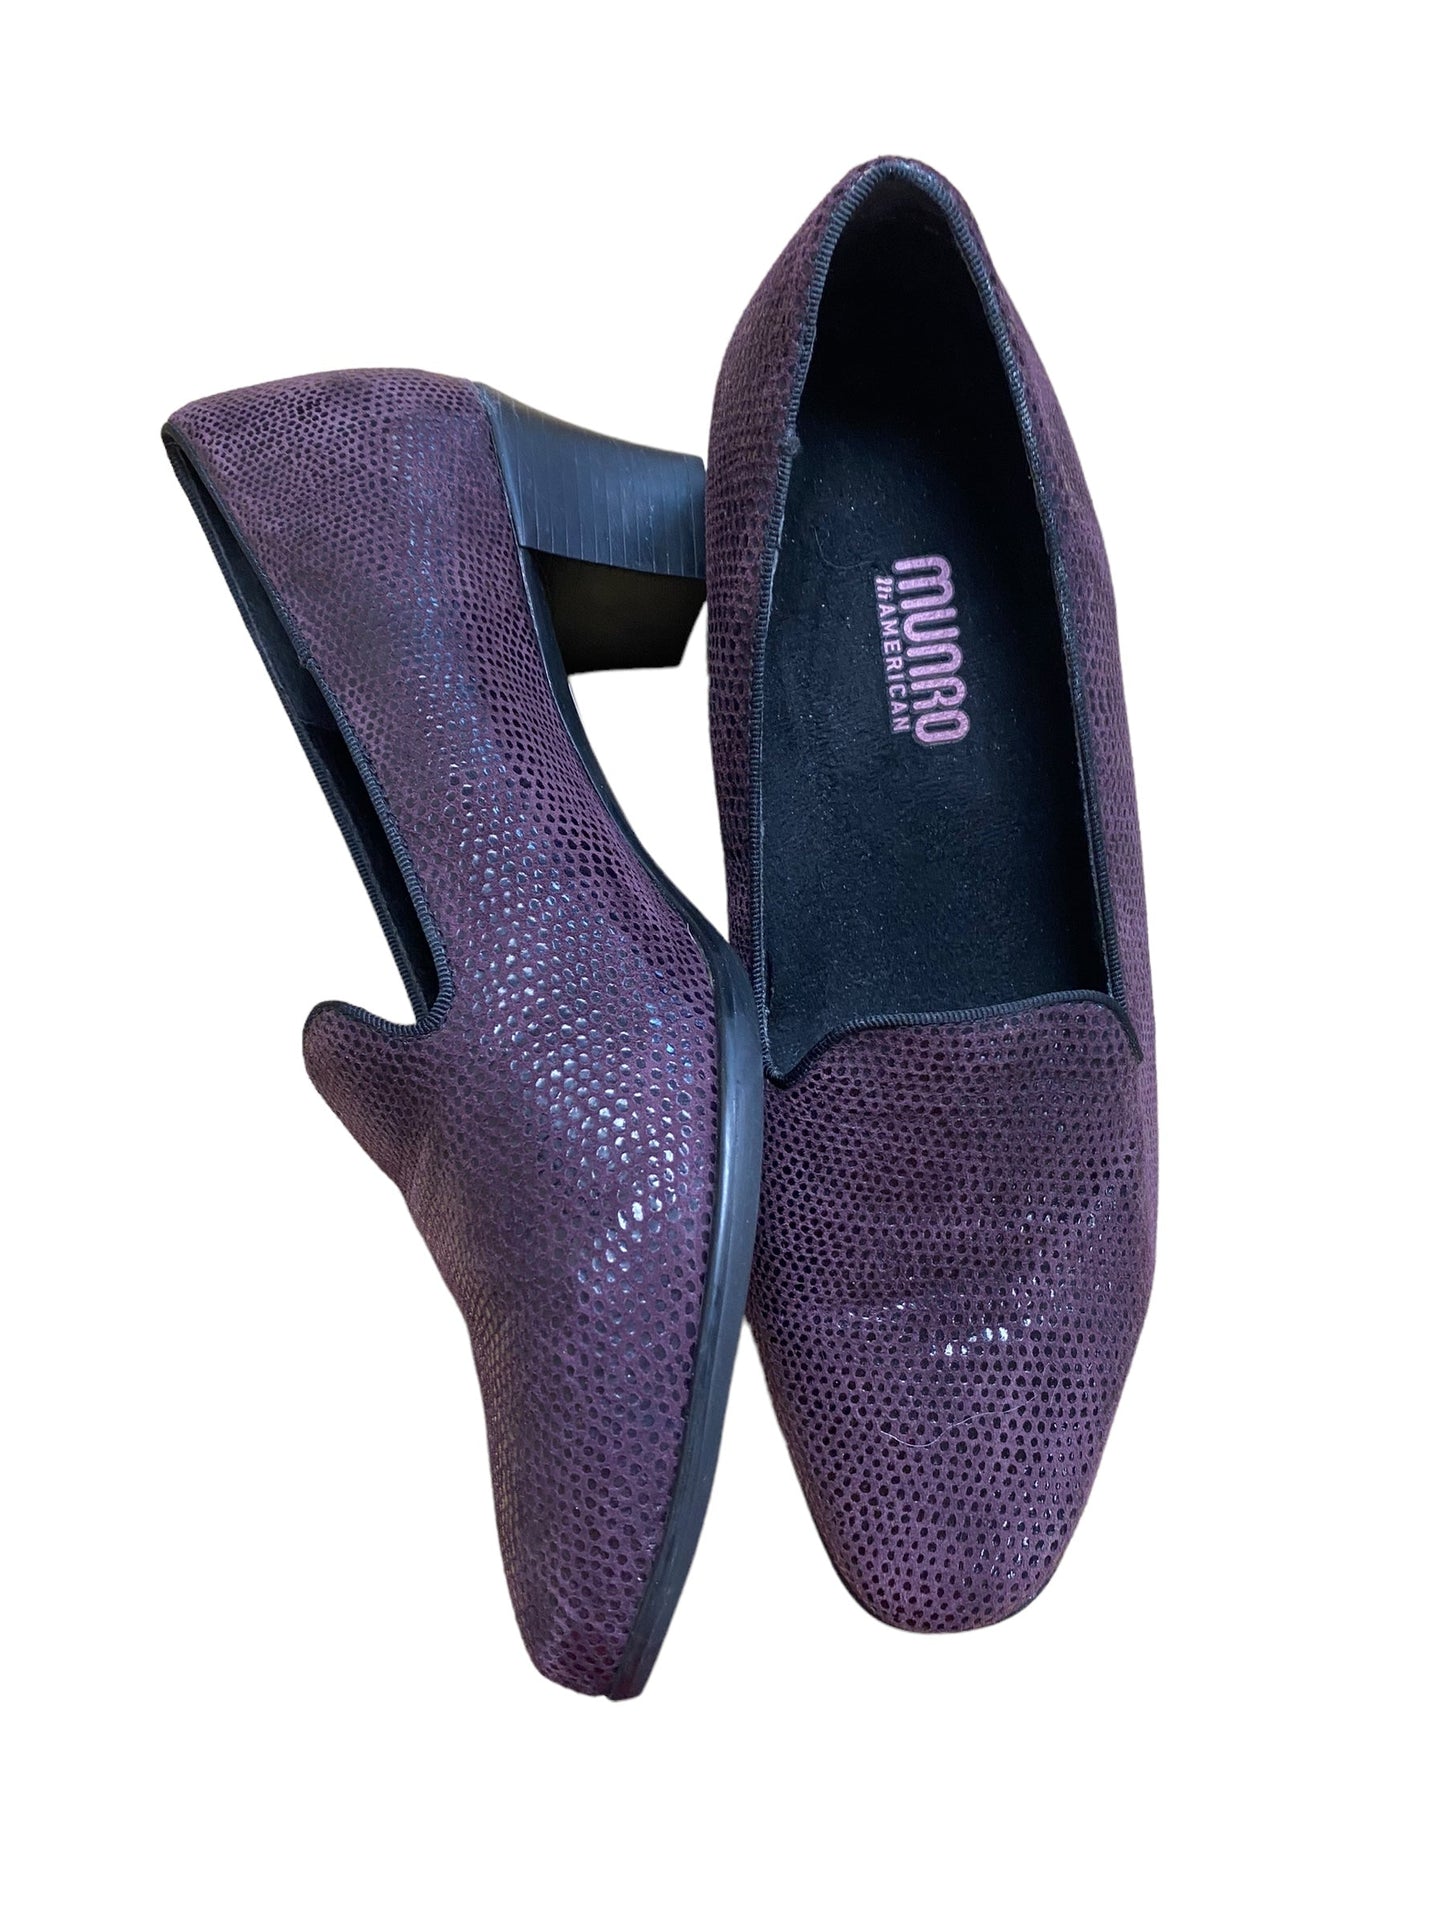 Purple Shoes Heels Block Clothes Mentor, Size 8